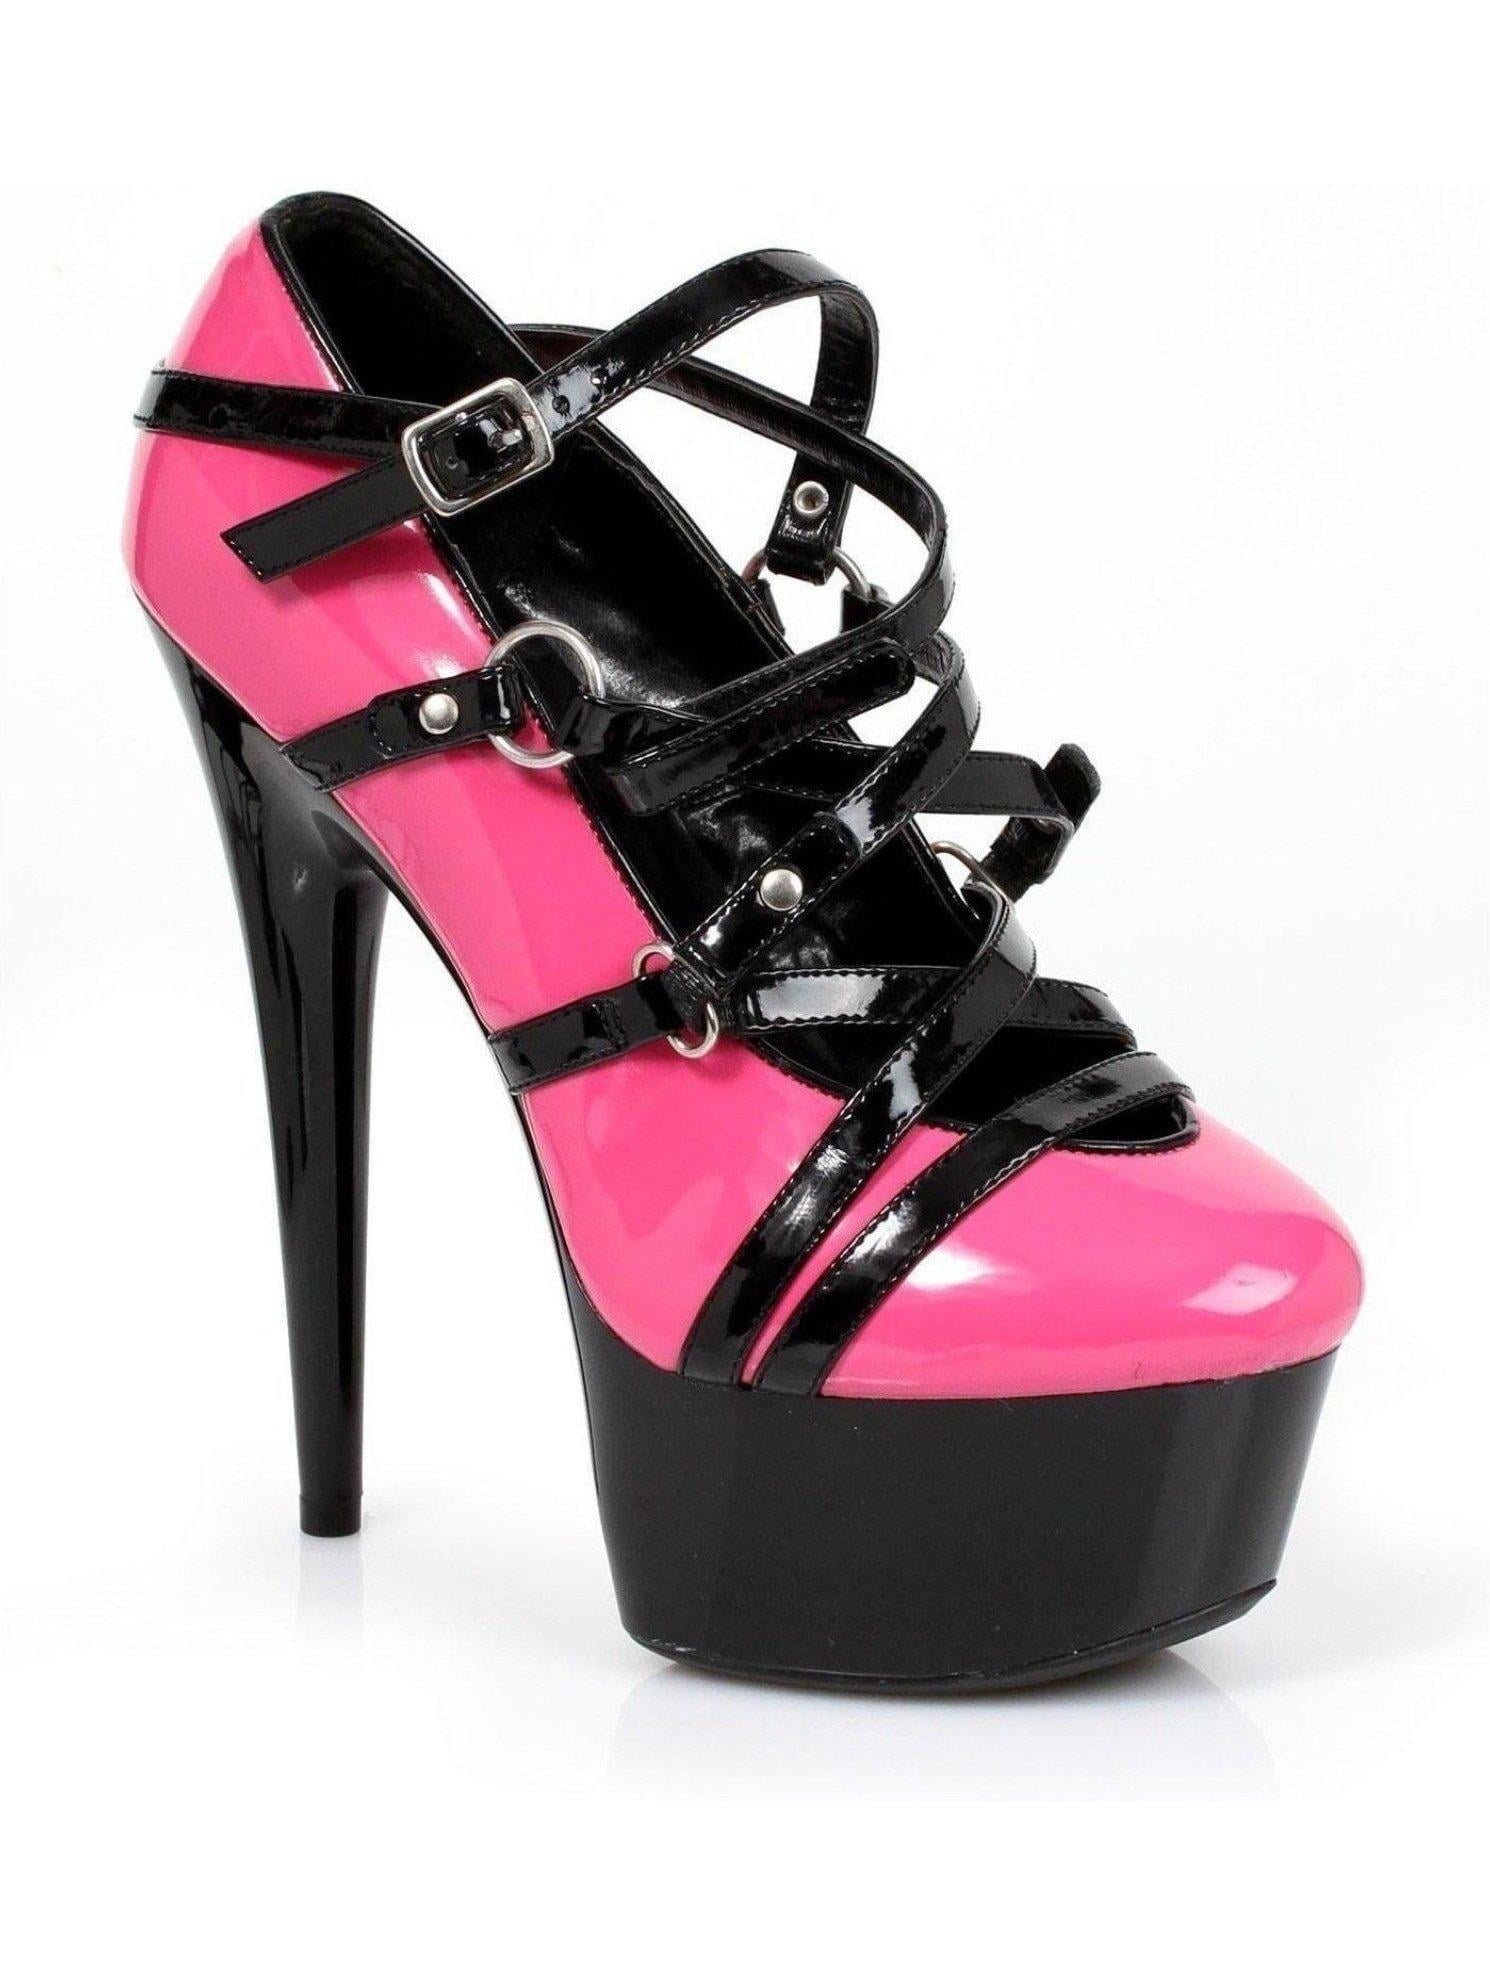 Ellie Shoes Womens 6.5 inch Stiletto Heel Pumps Silver Spikes Black;11